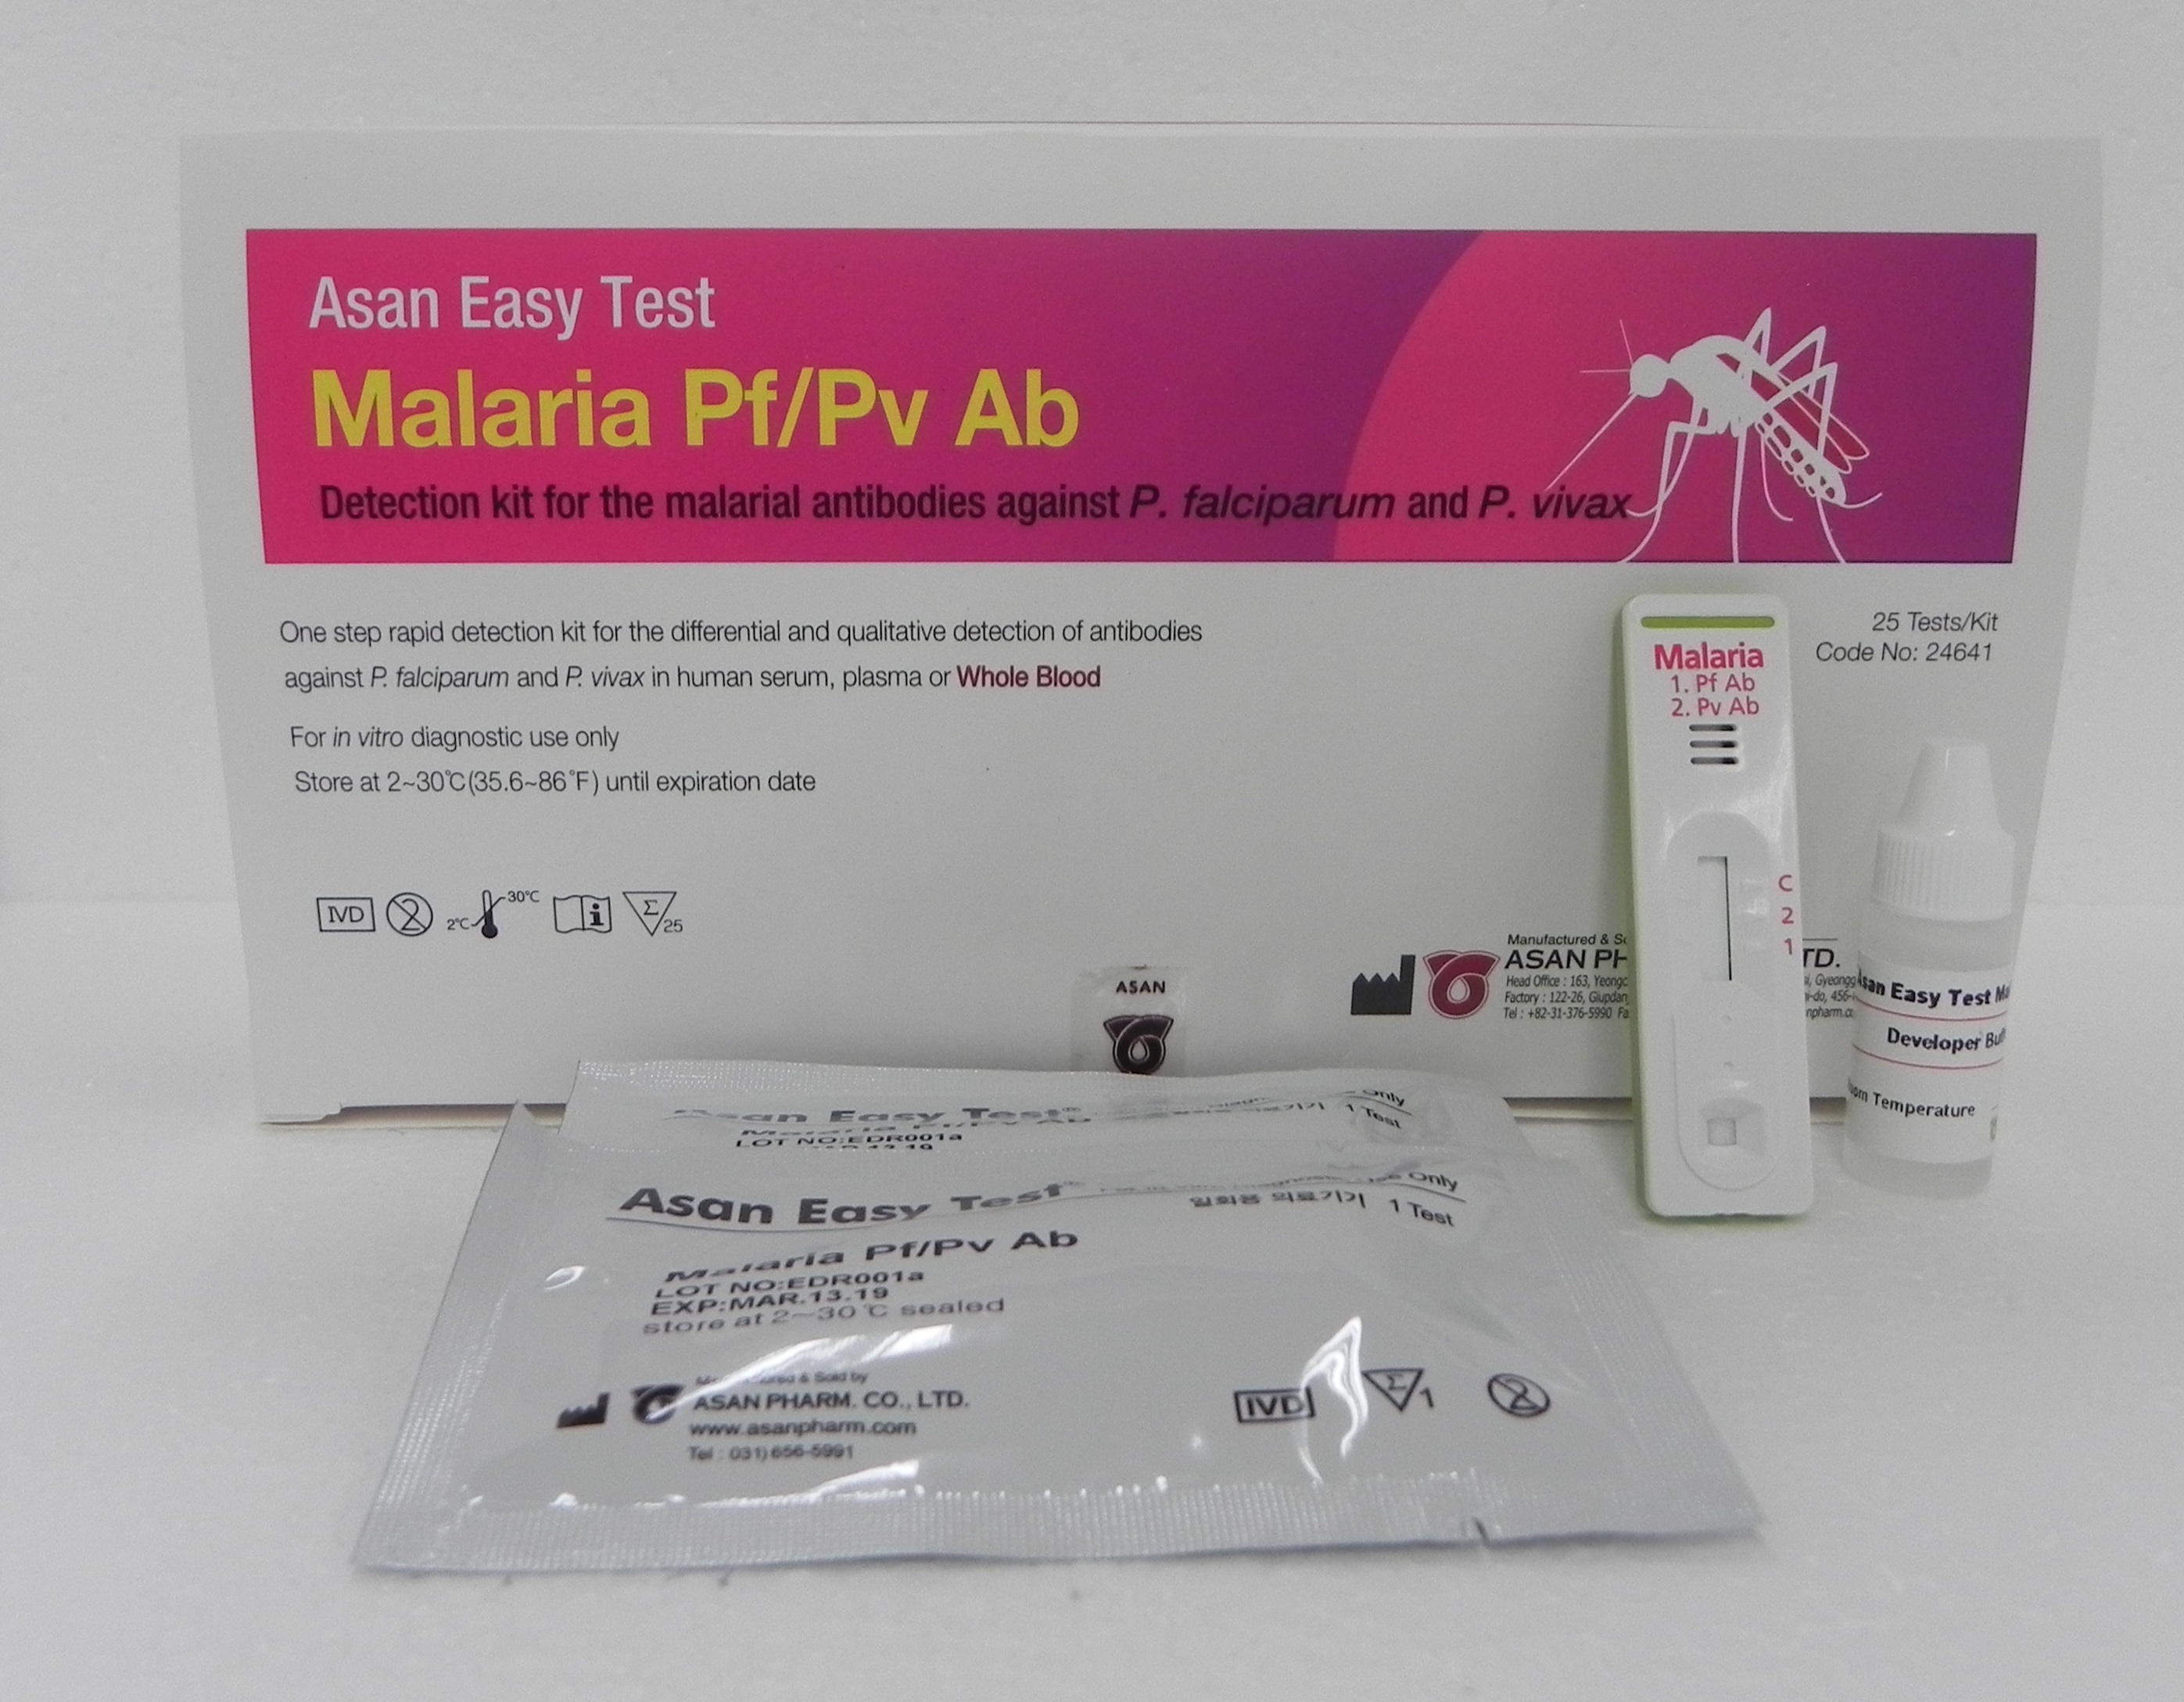 Asan Easy Test Malaria Pf/Pv Ab